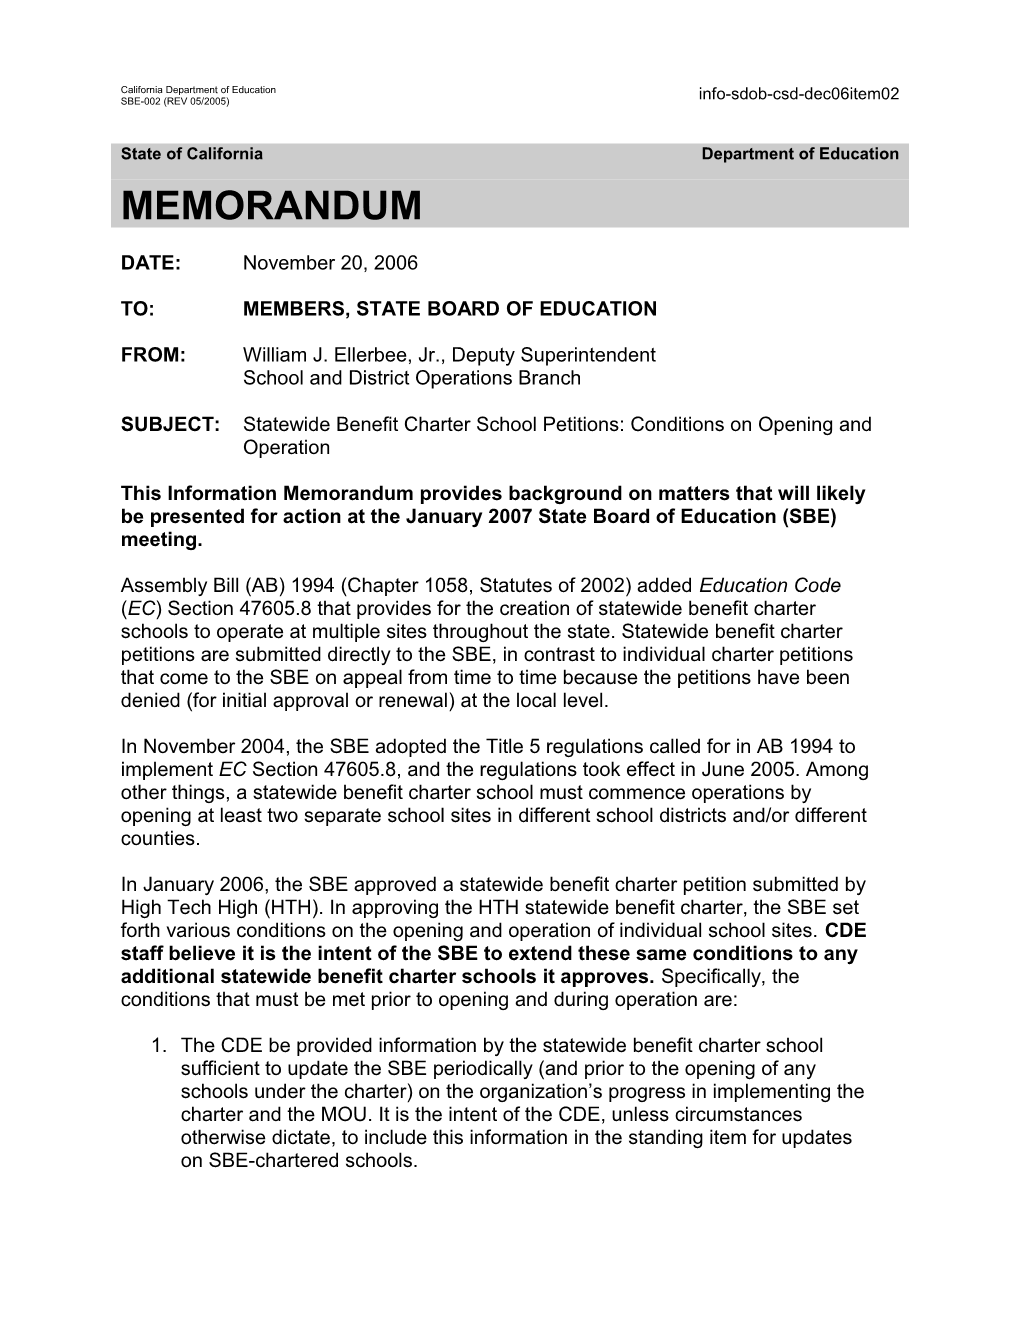 December 2006 CSD Item 2 - Information Memorandum (CA State Board of Education)